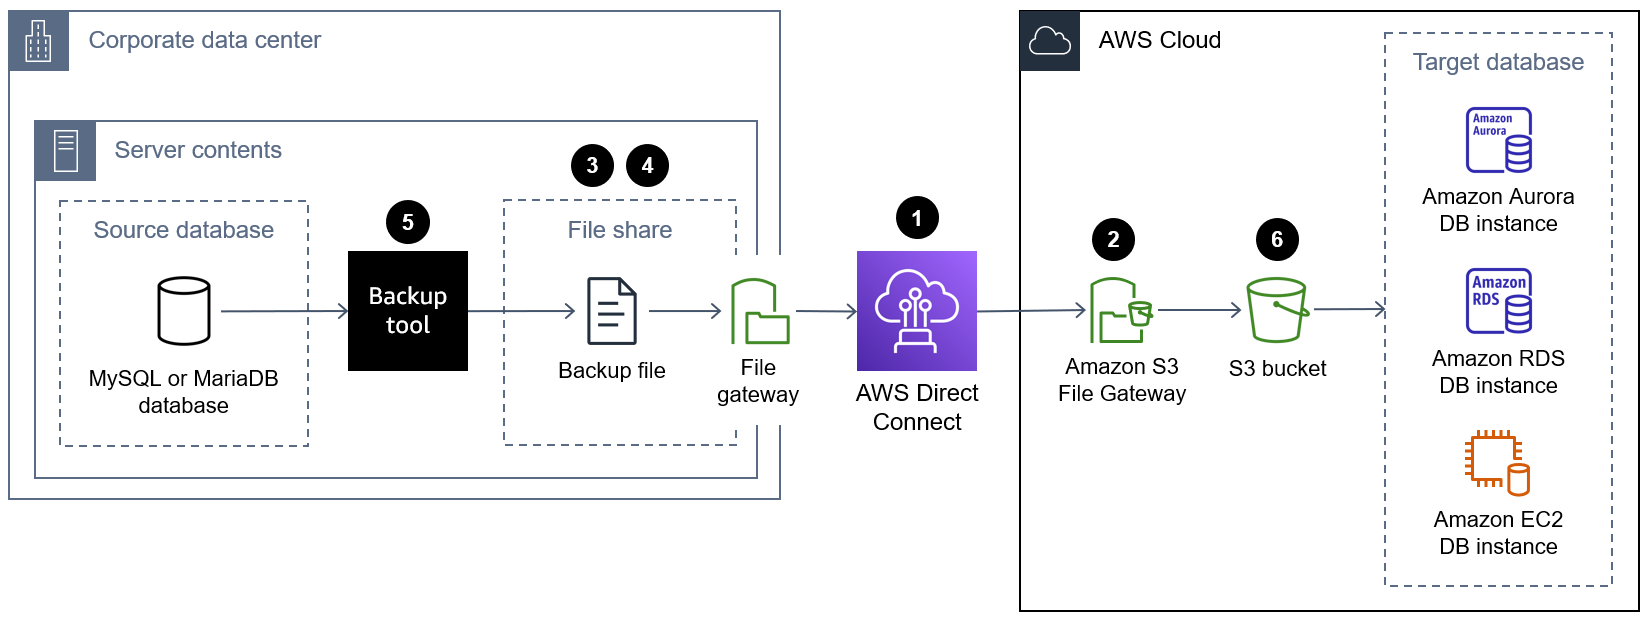 Amazon S3 File Gateway を使用してデータベースバックアップファイルをクラウドに転送する方法を示す図。